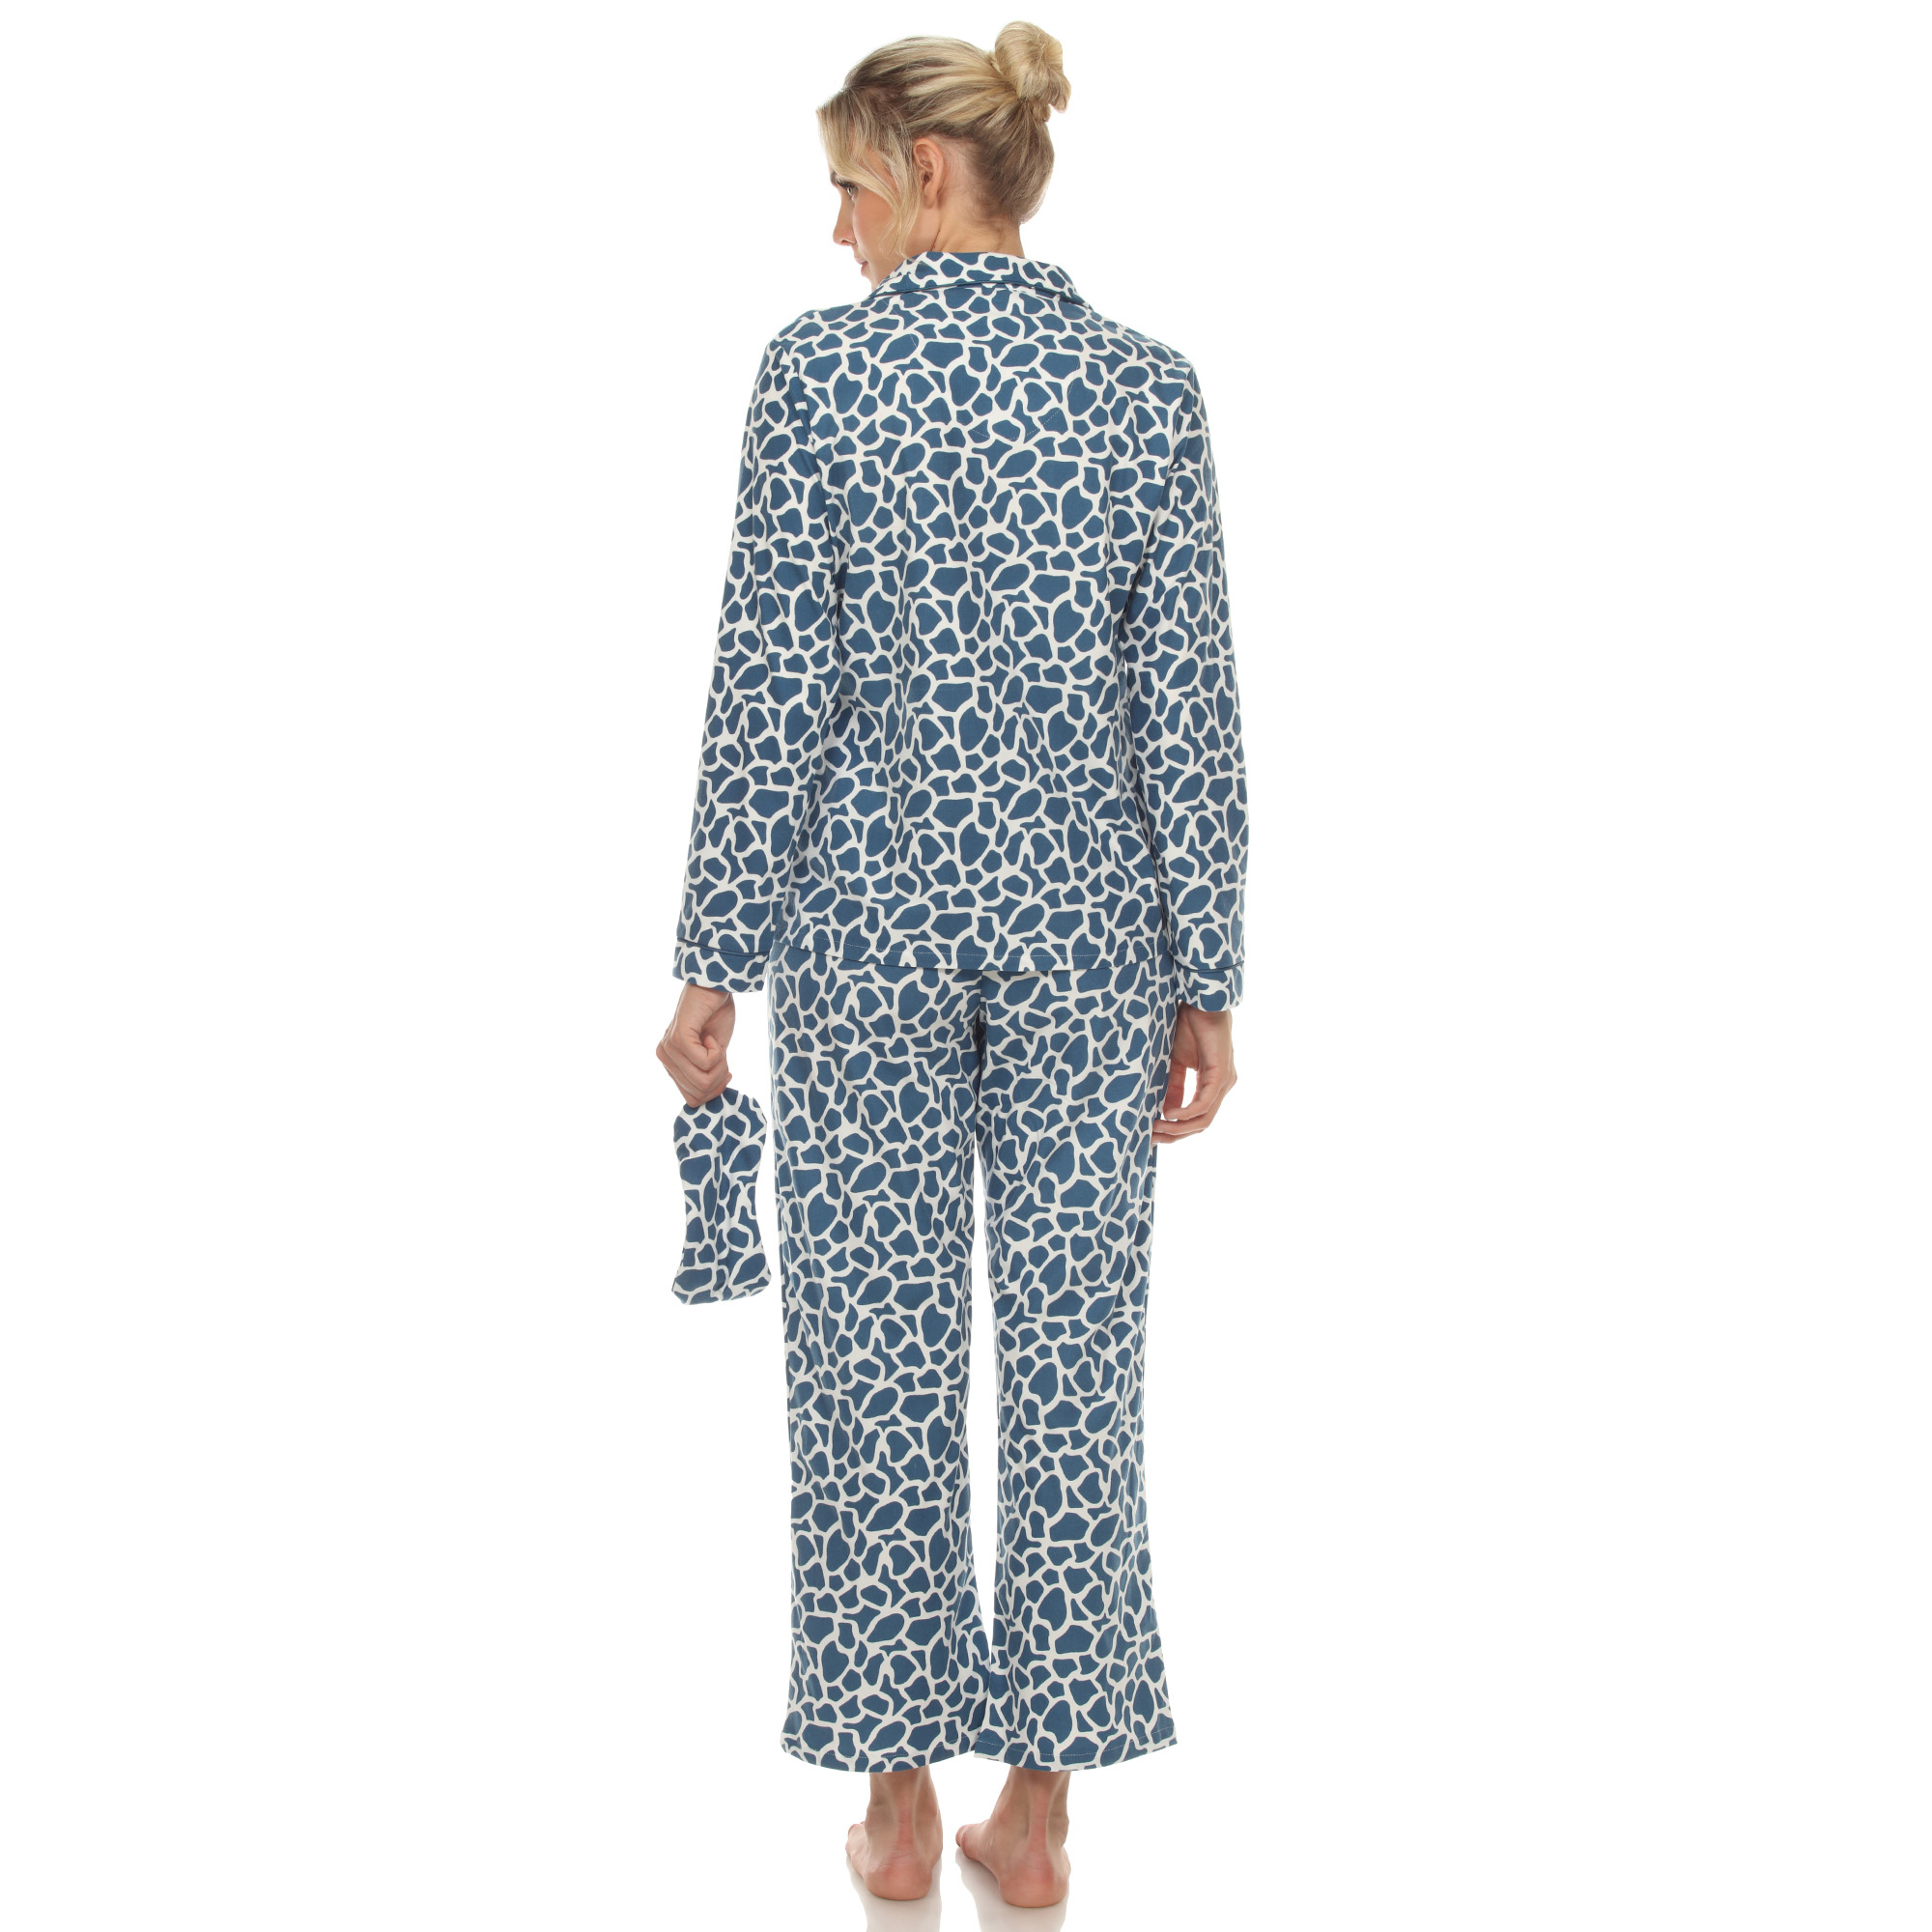 White Mark Women's Animal Print Three-Piece Pajama Set - Red Leopard, X-Large